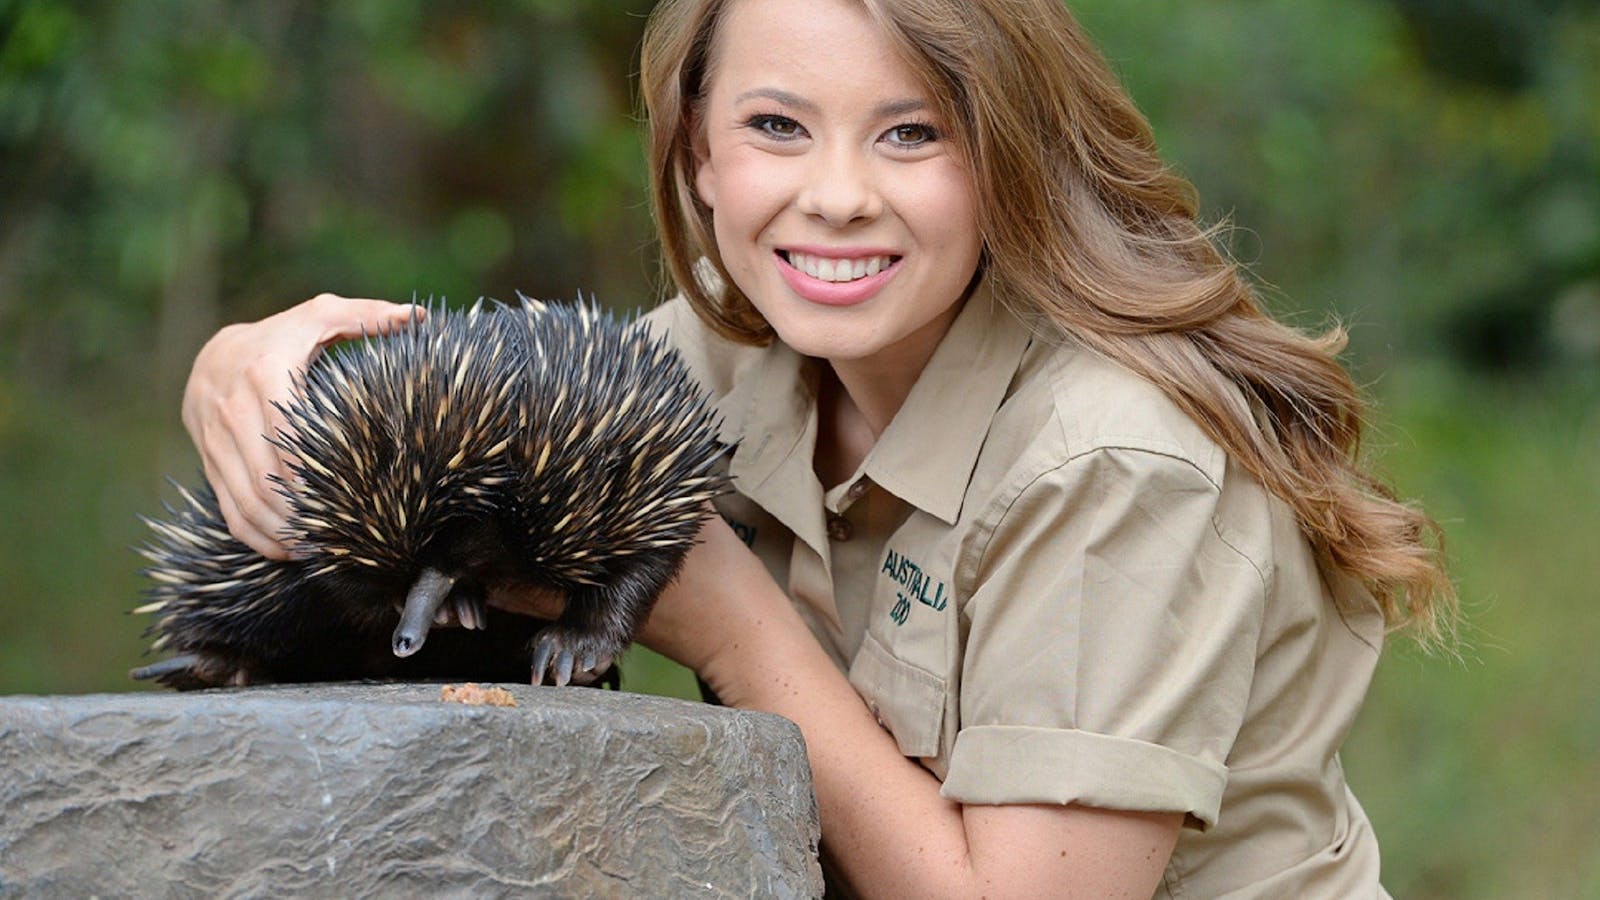 Bindi Irwin with Echidna at Australia Zoo